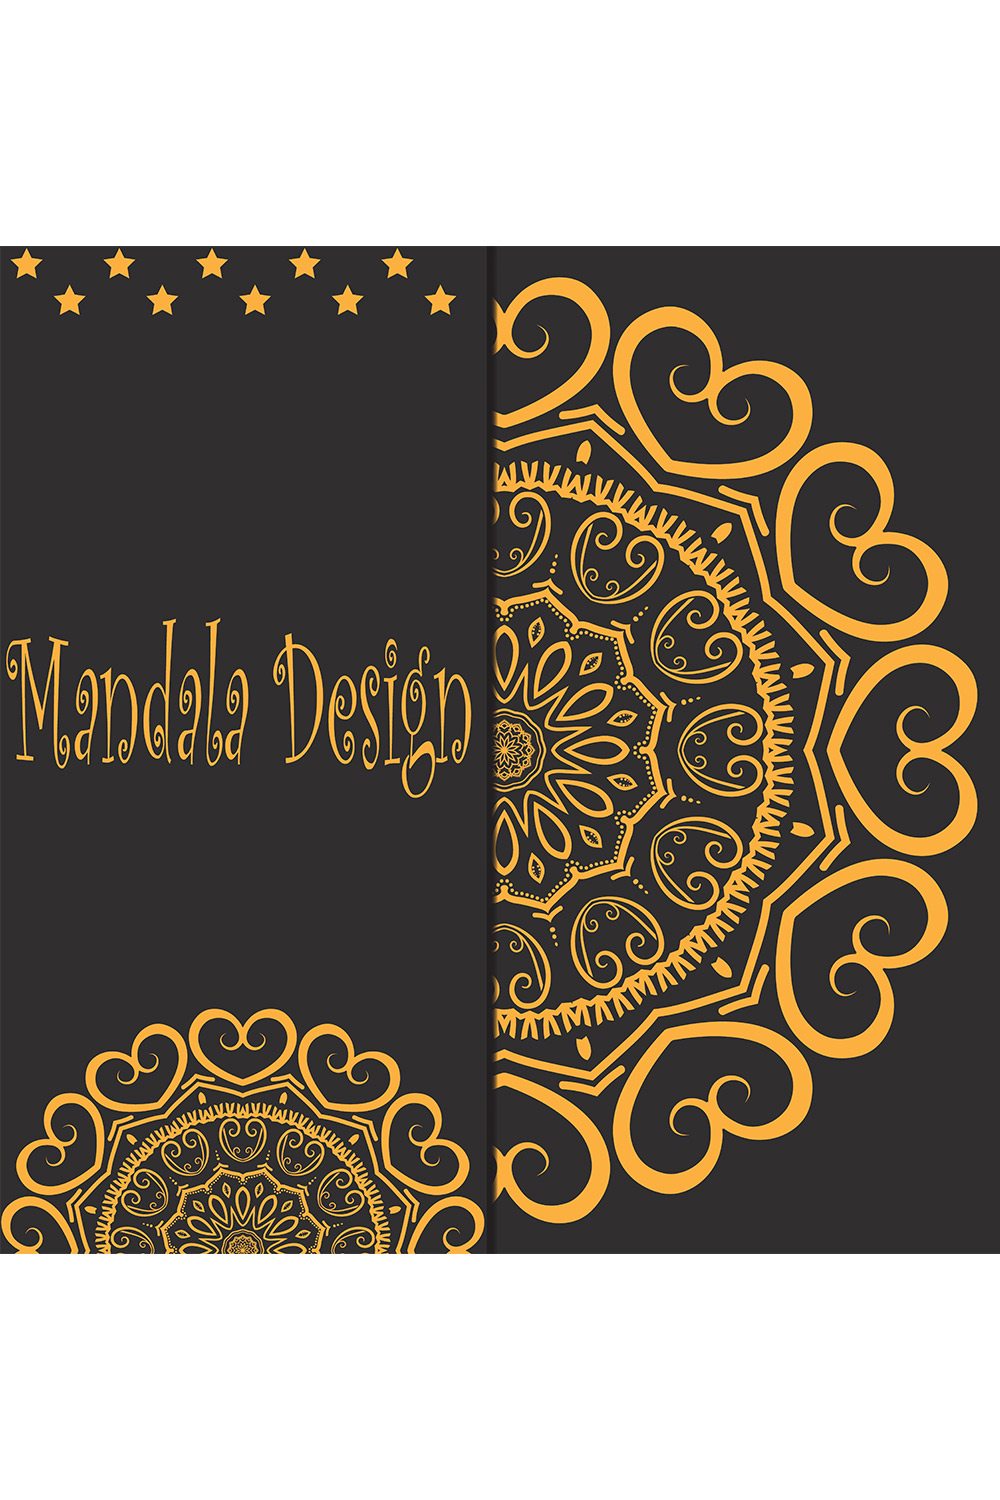 Mandala golden pattern art pinterest preview image.